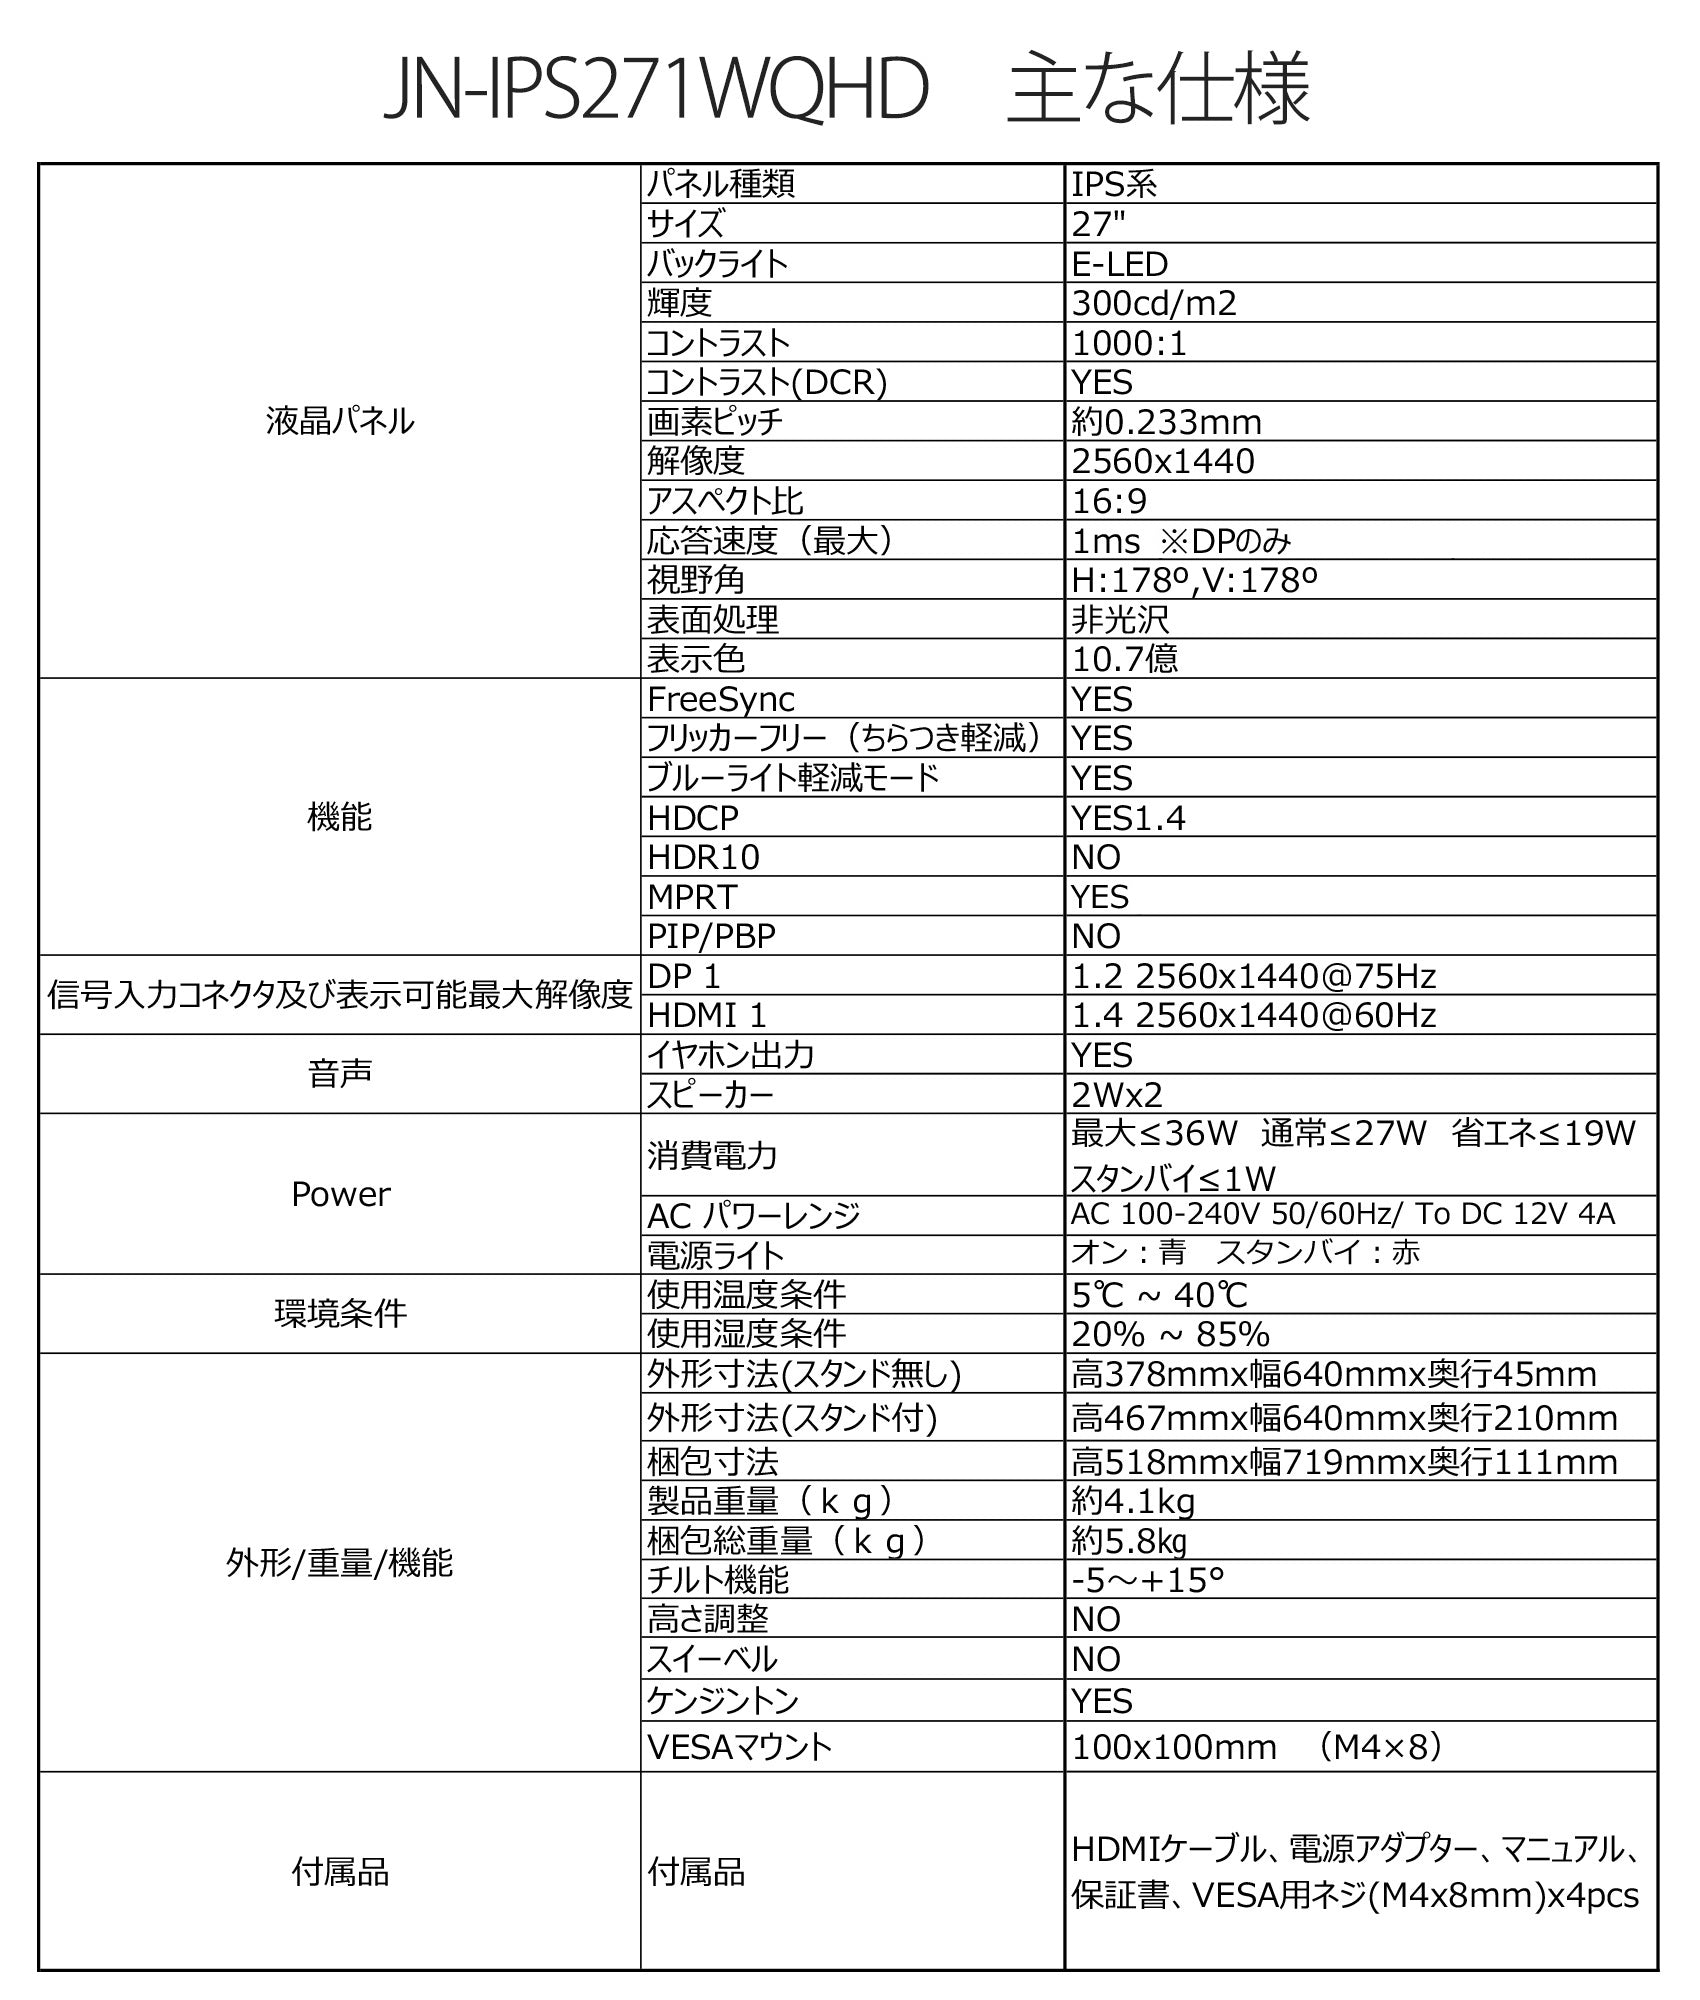 JAPANNEXT 27インチ WQHD(2560 x 1440) 液晶モニター JN-IPS271WQHD